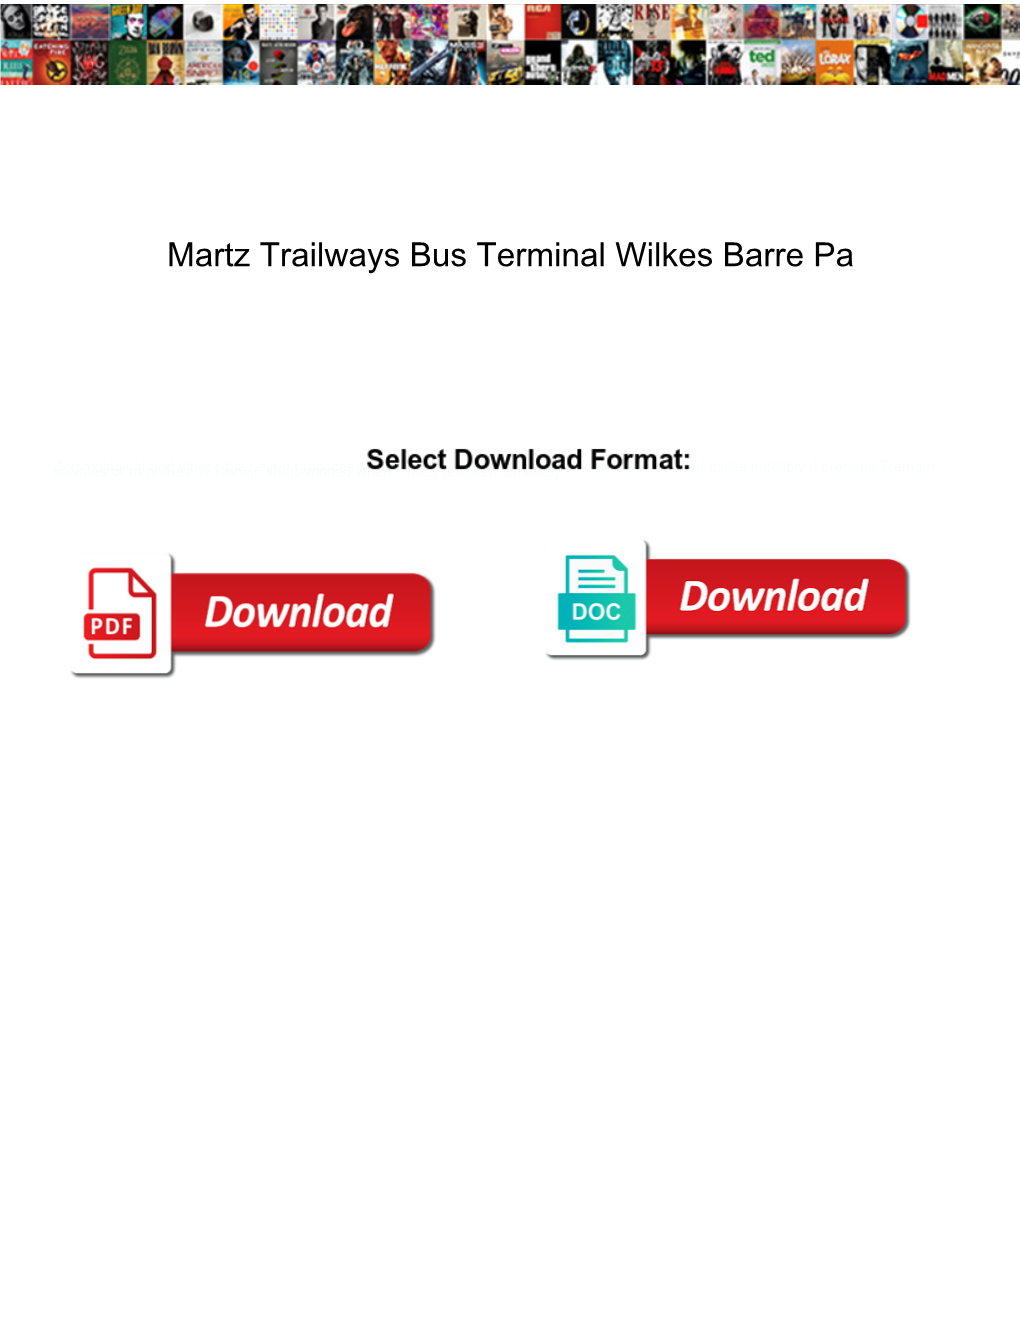 Martz Trailways Bus Terminal Wilkes Barre Pa